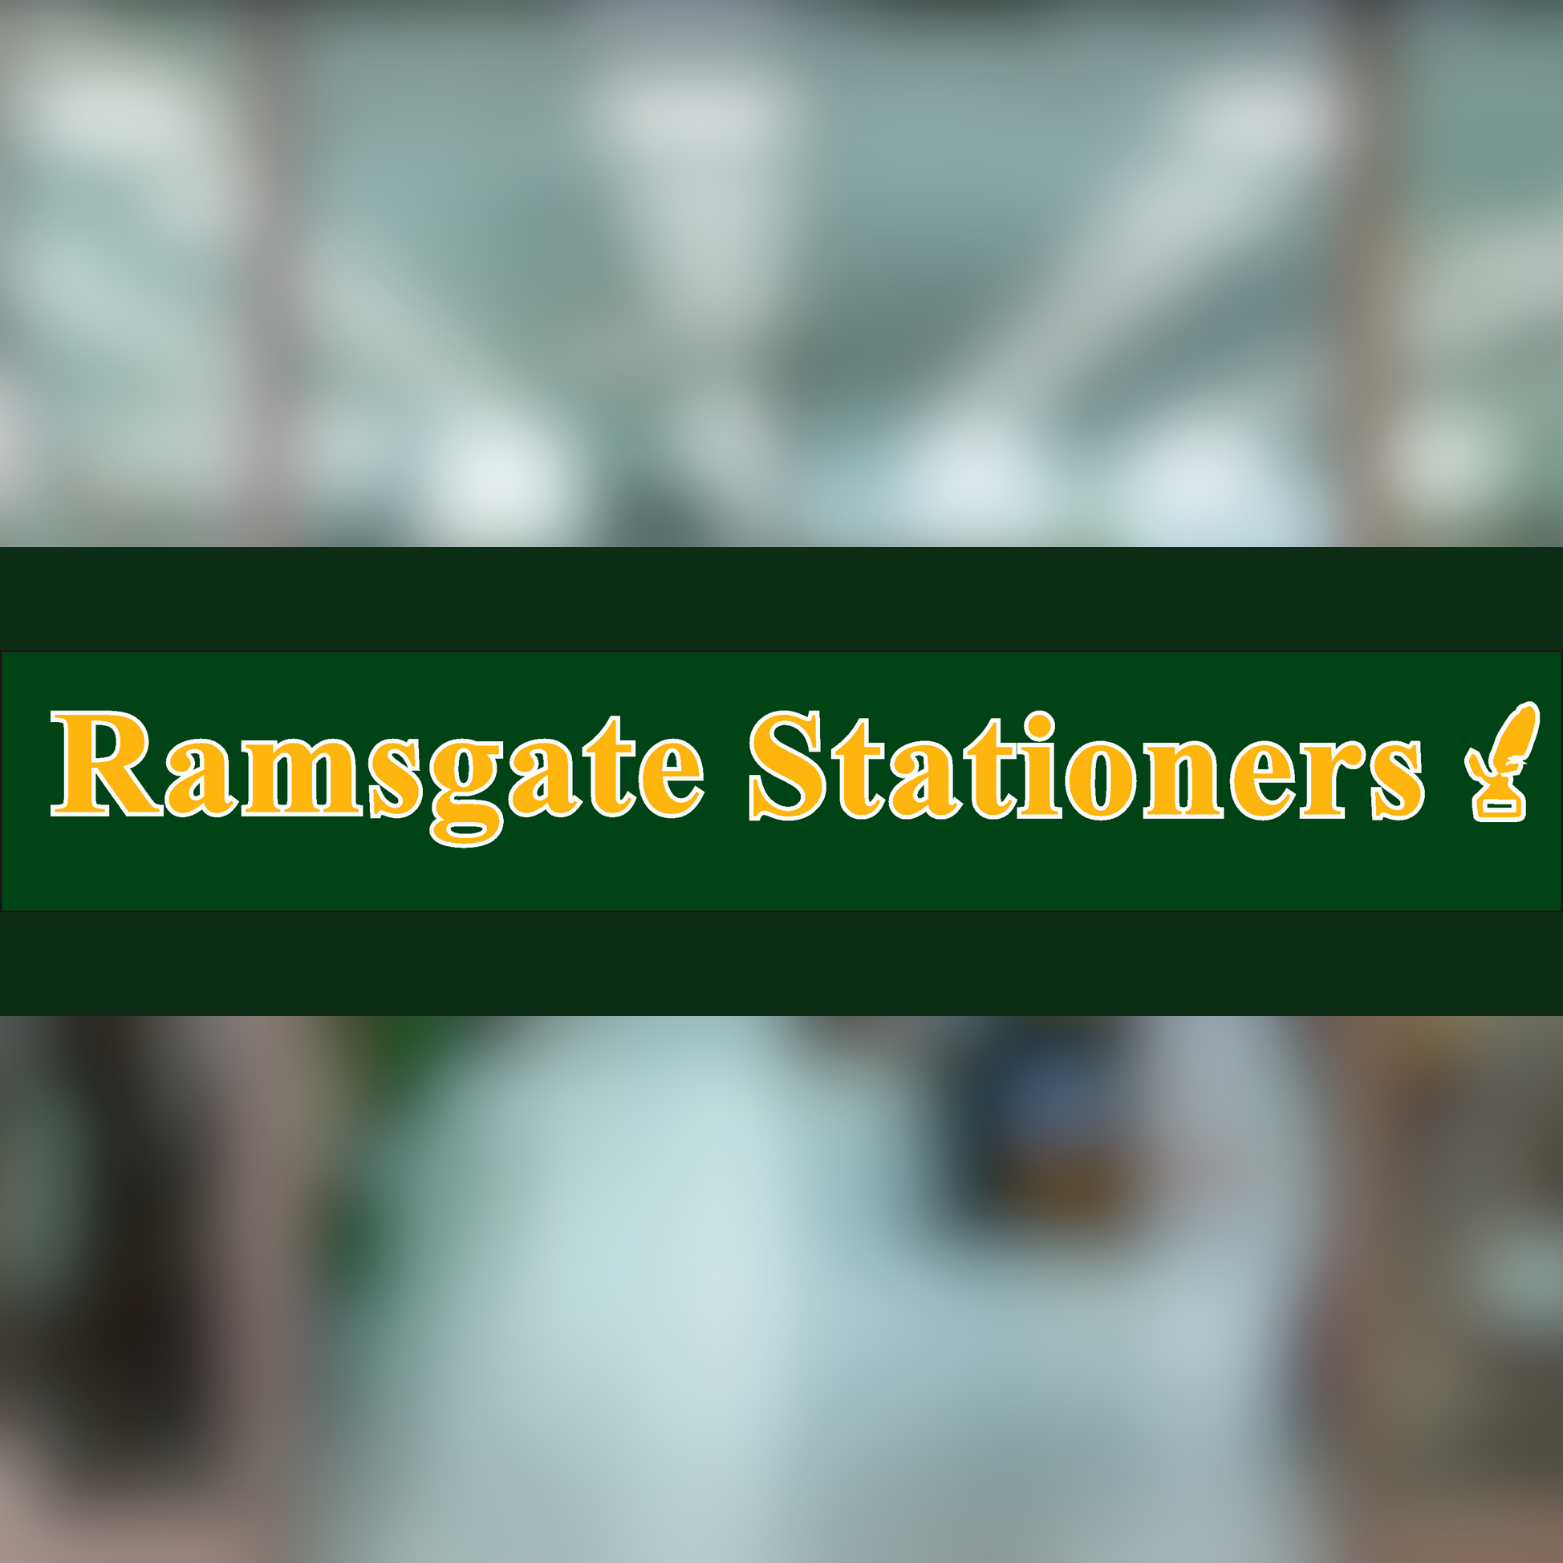 Ramsgate Stationers